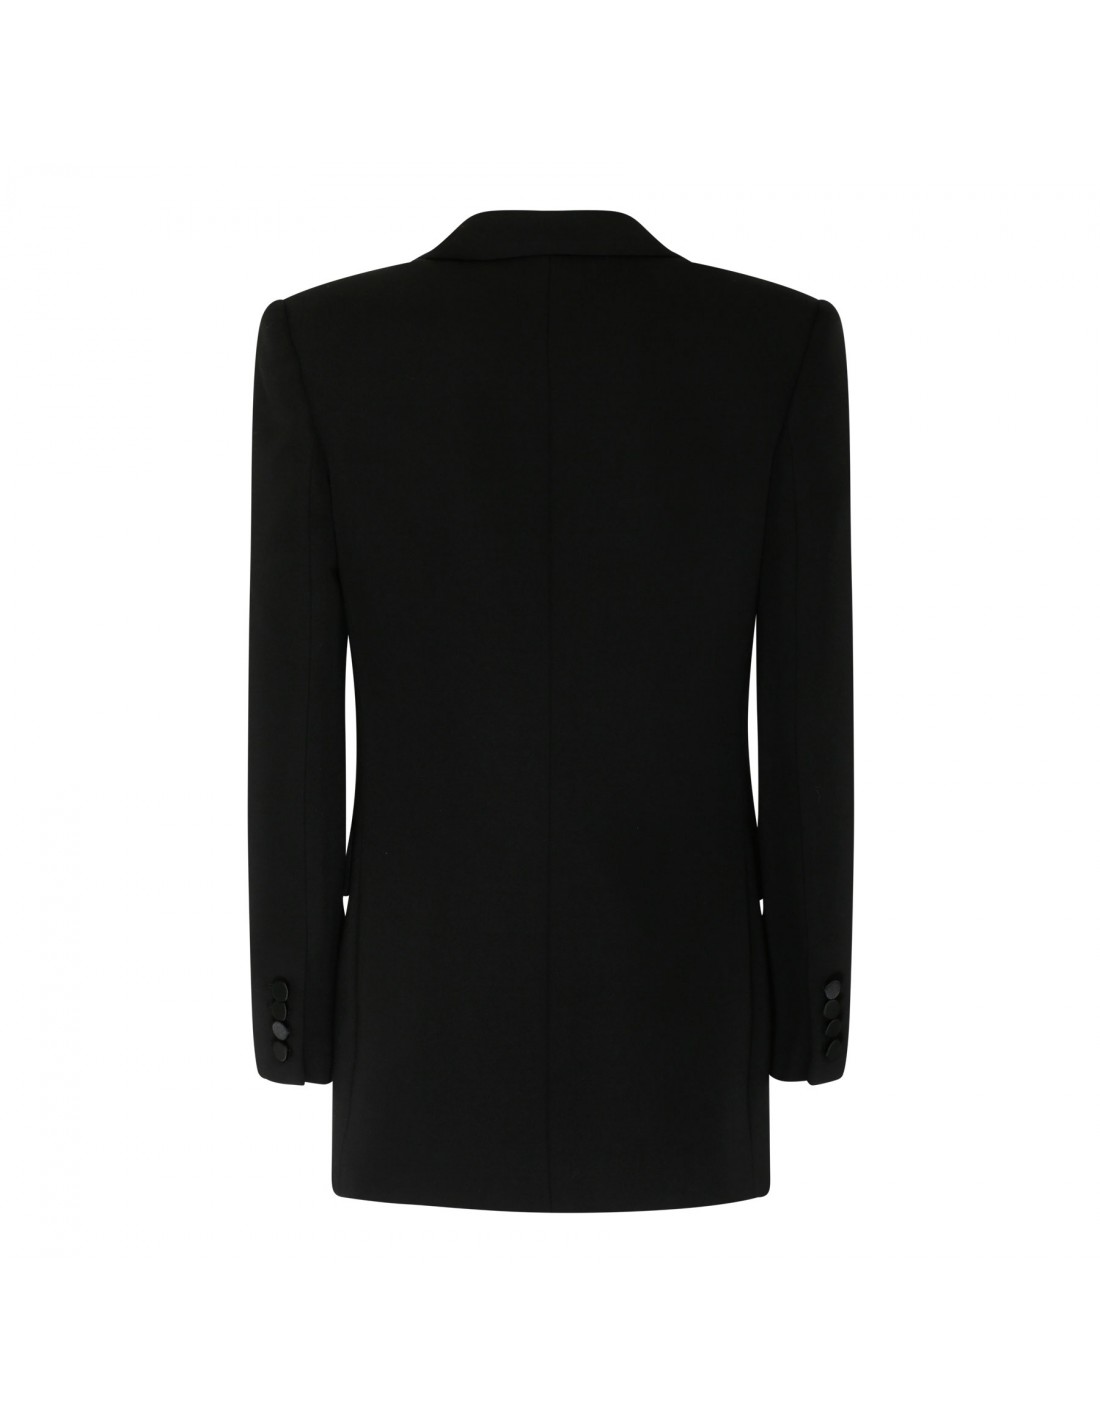 Black grain de poudre tuxedo jacket